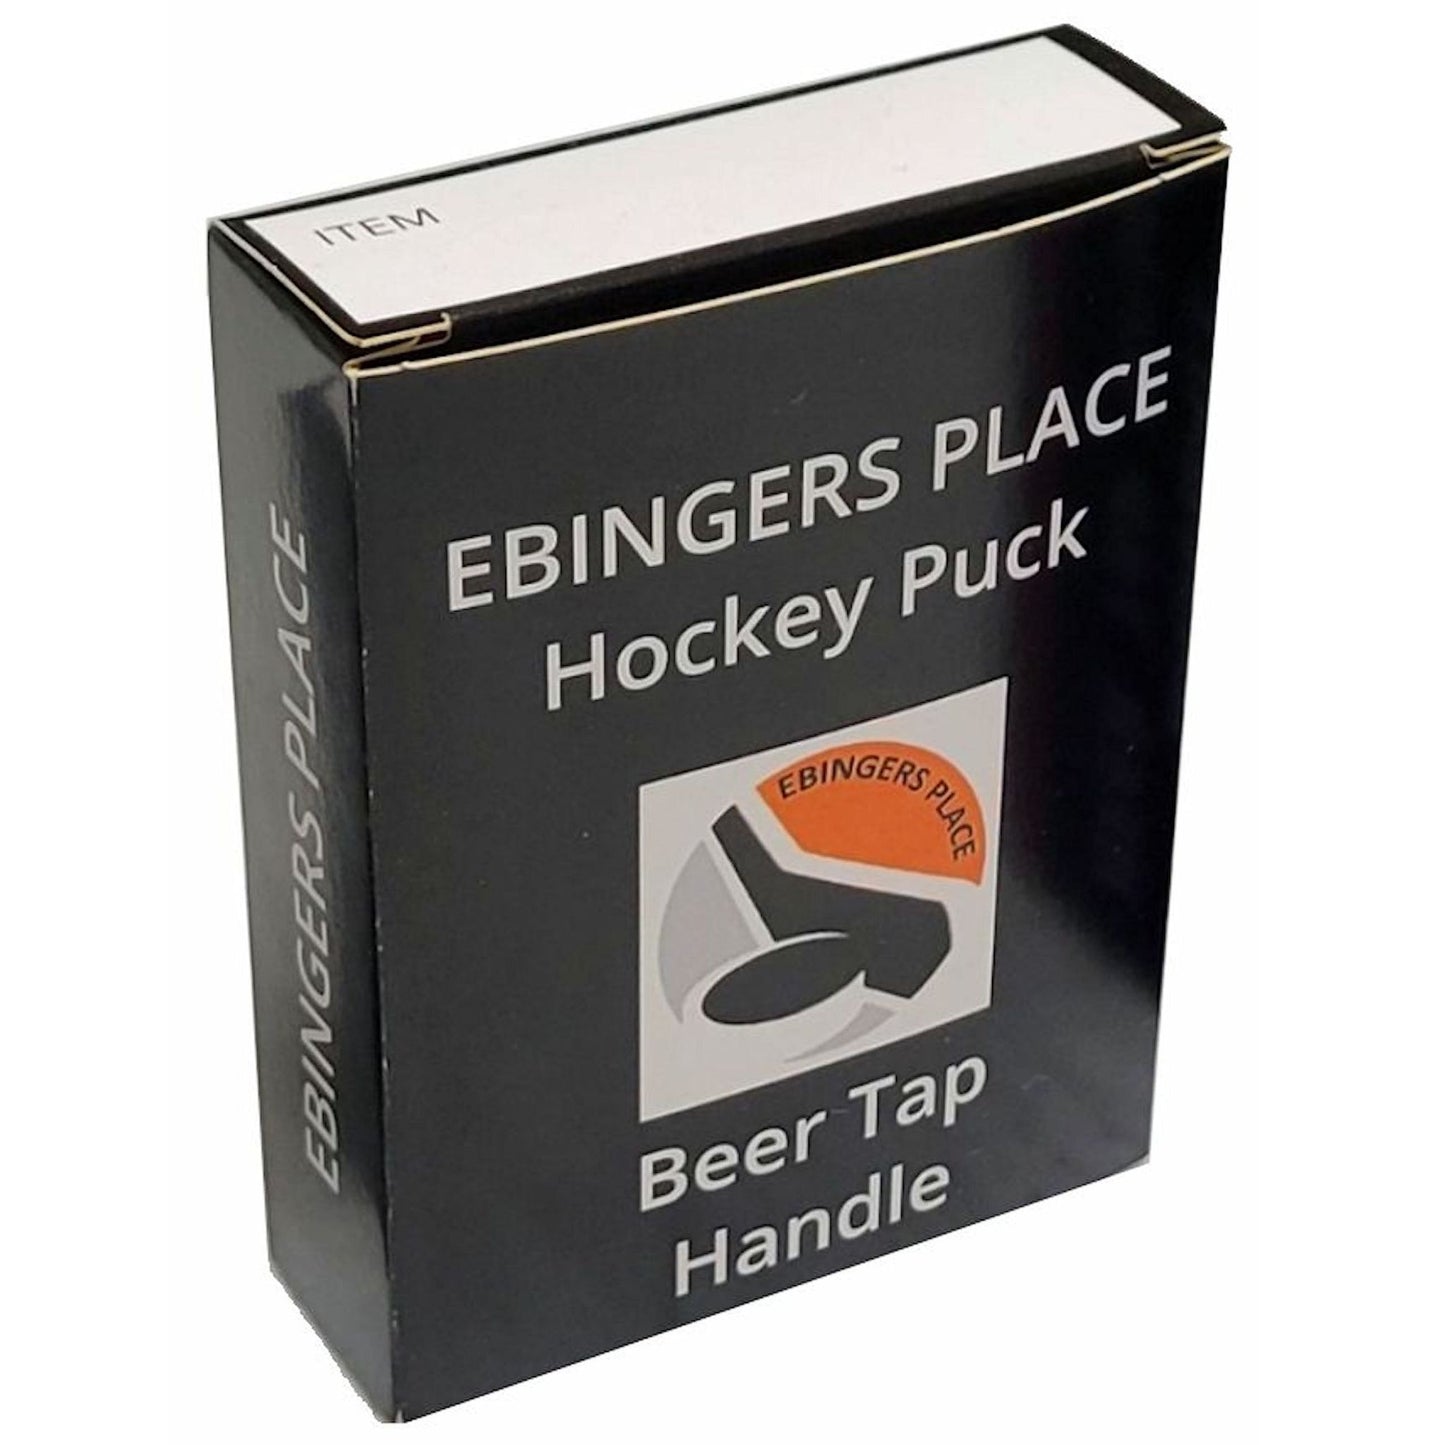 Vancouver Canucks Clone Series Hockey Puck Beer Tap Handle